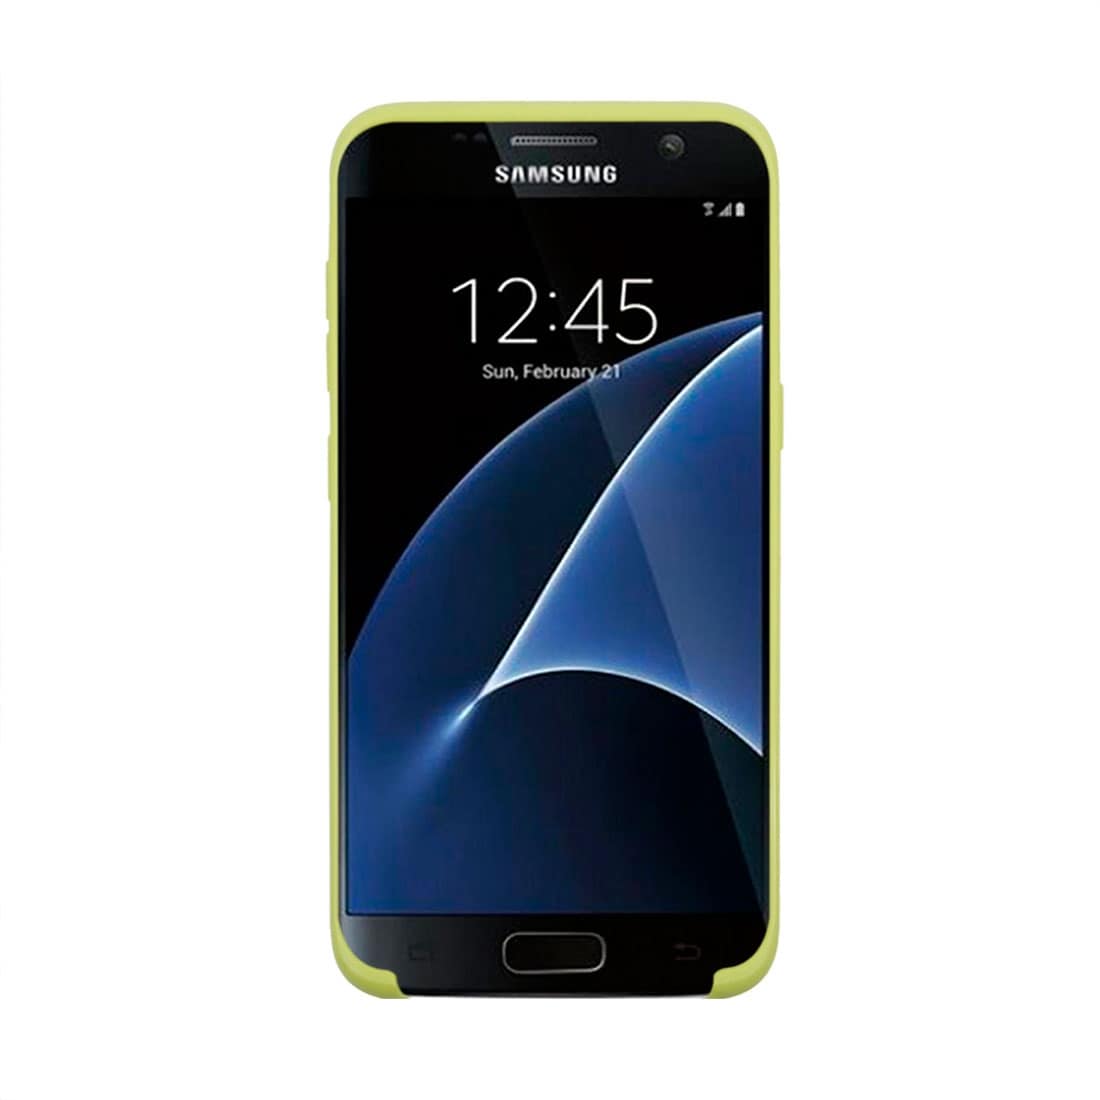 Designskal Samsung Galaxy S8 i Limegrönd